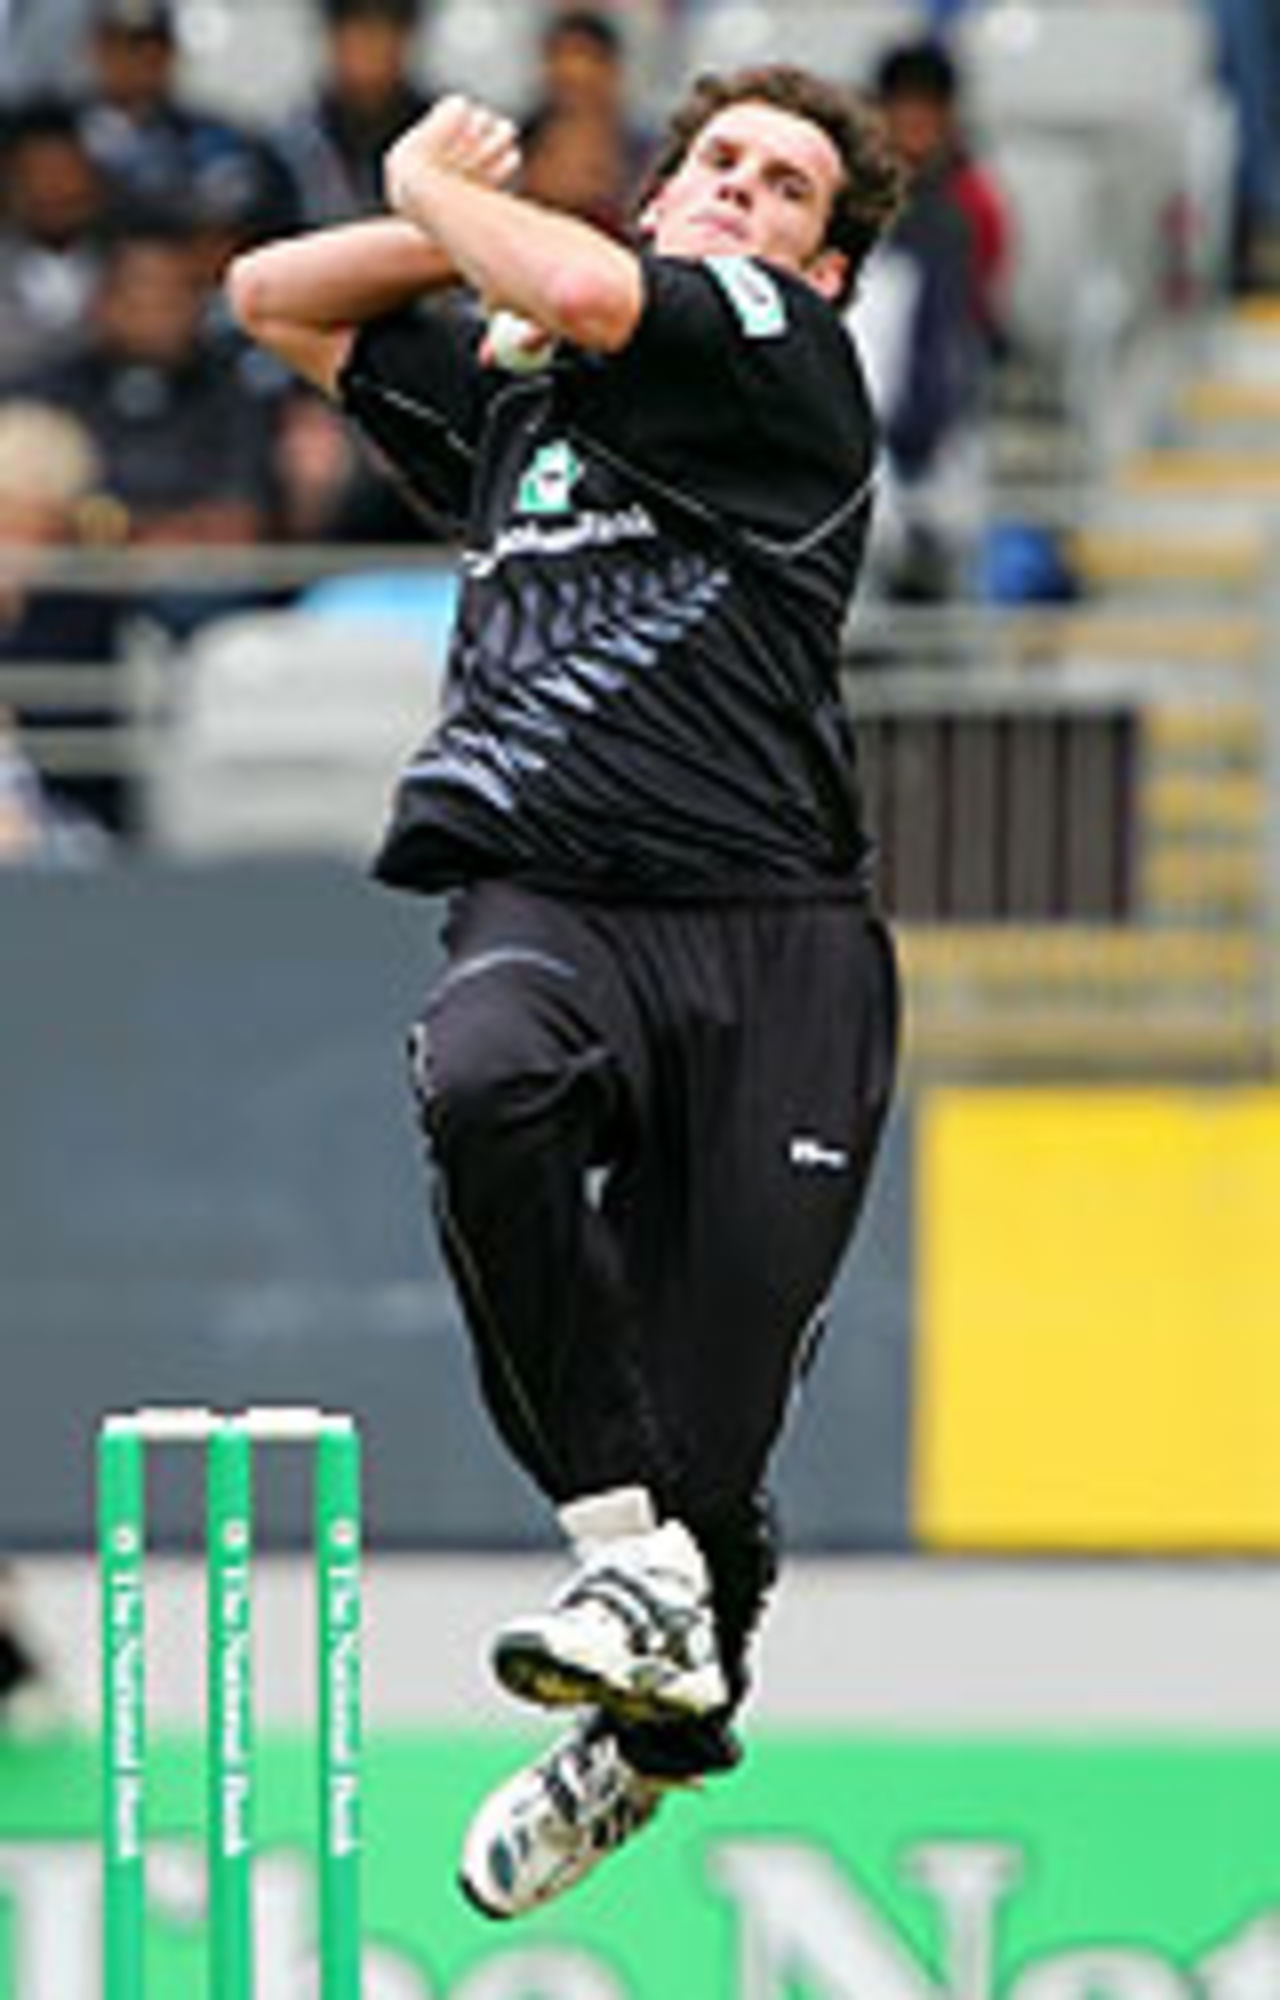 Kyle Mills about the bowl, New Zealand v Sri Lanka, 1st ODI, Auckland, December 26, 2004